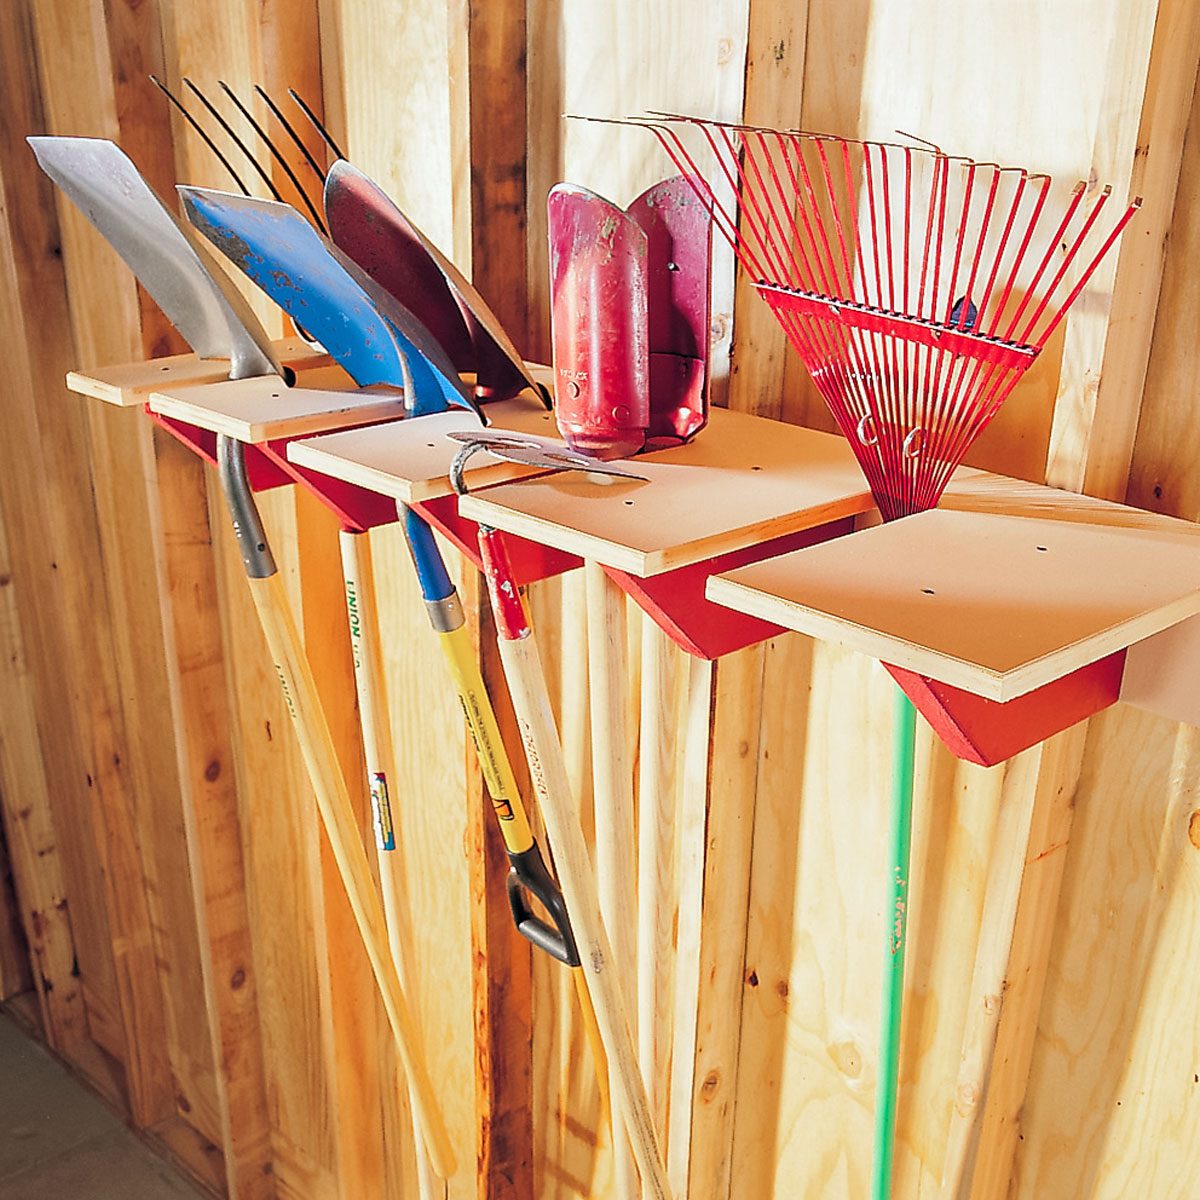 How To Build a Shovel Rack for Garage Storage